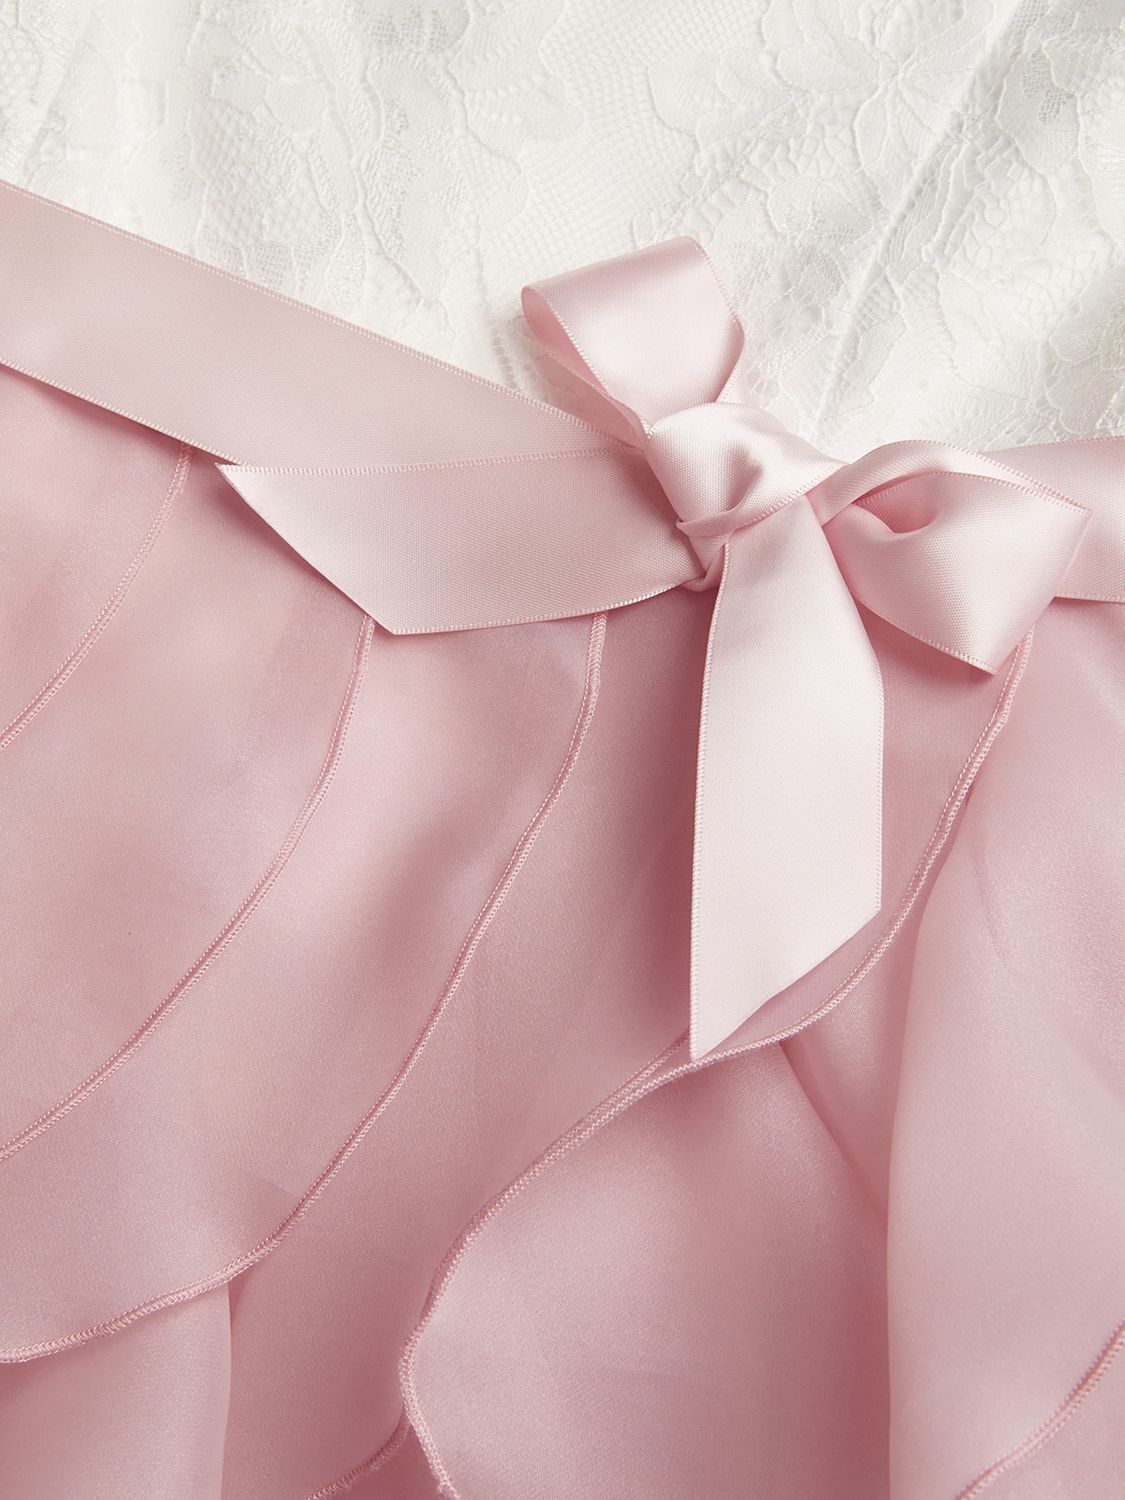 Monsoon Kids' Lace Ruffle Dress, Pink at John Lewis & Partners